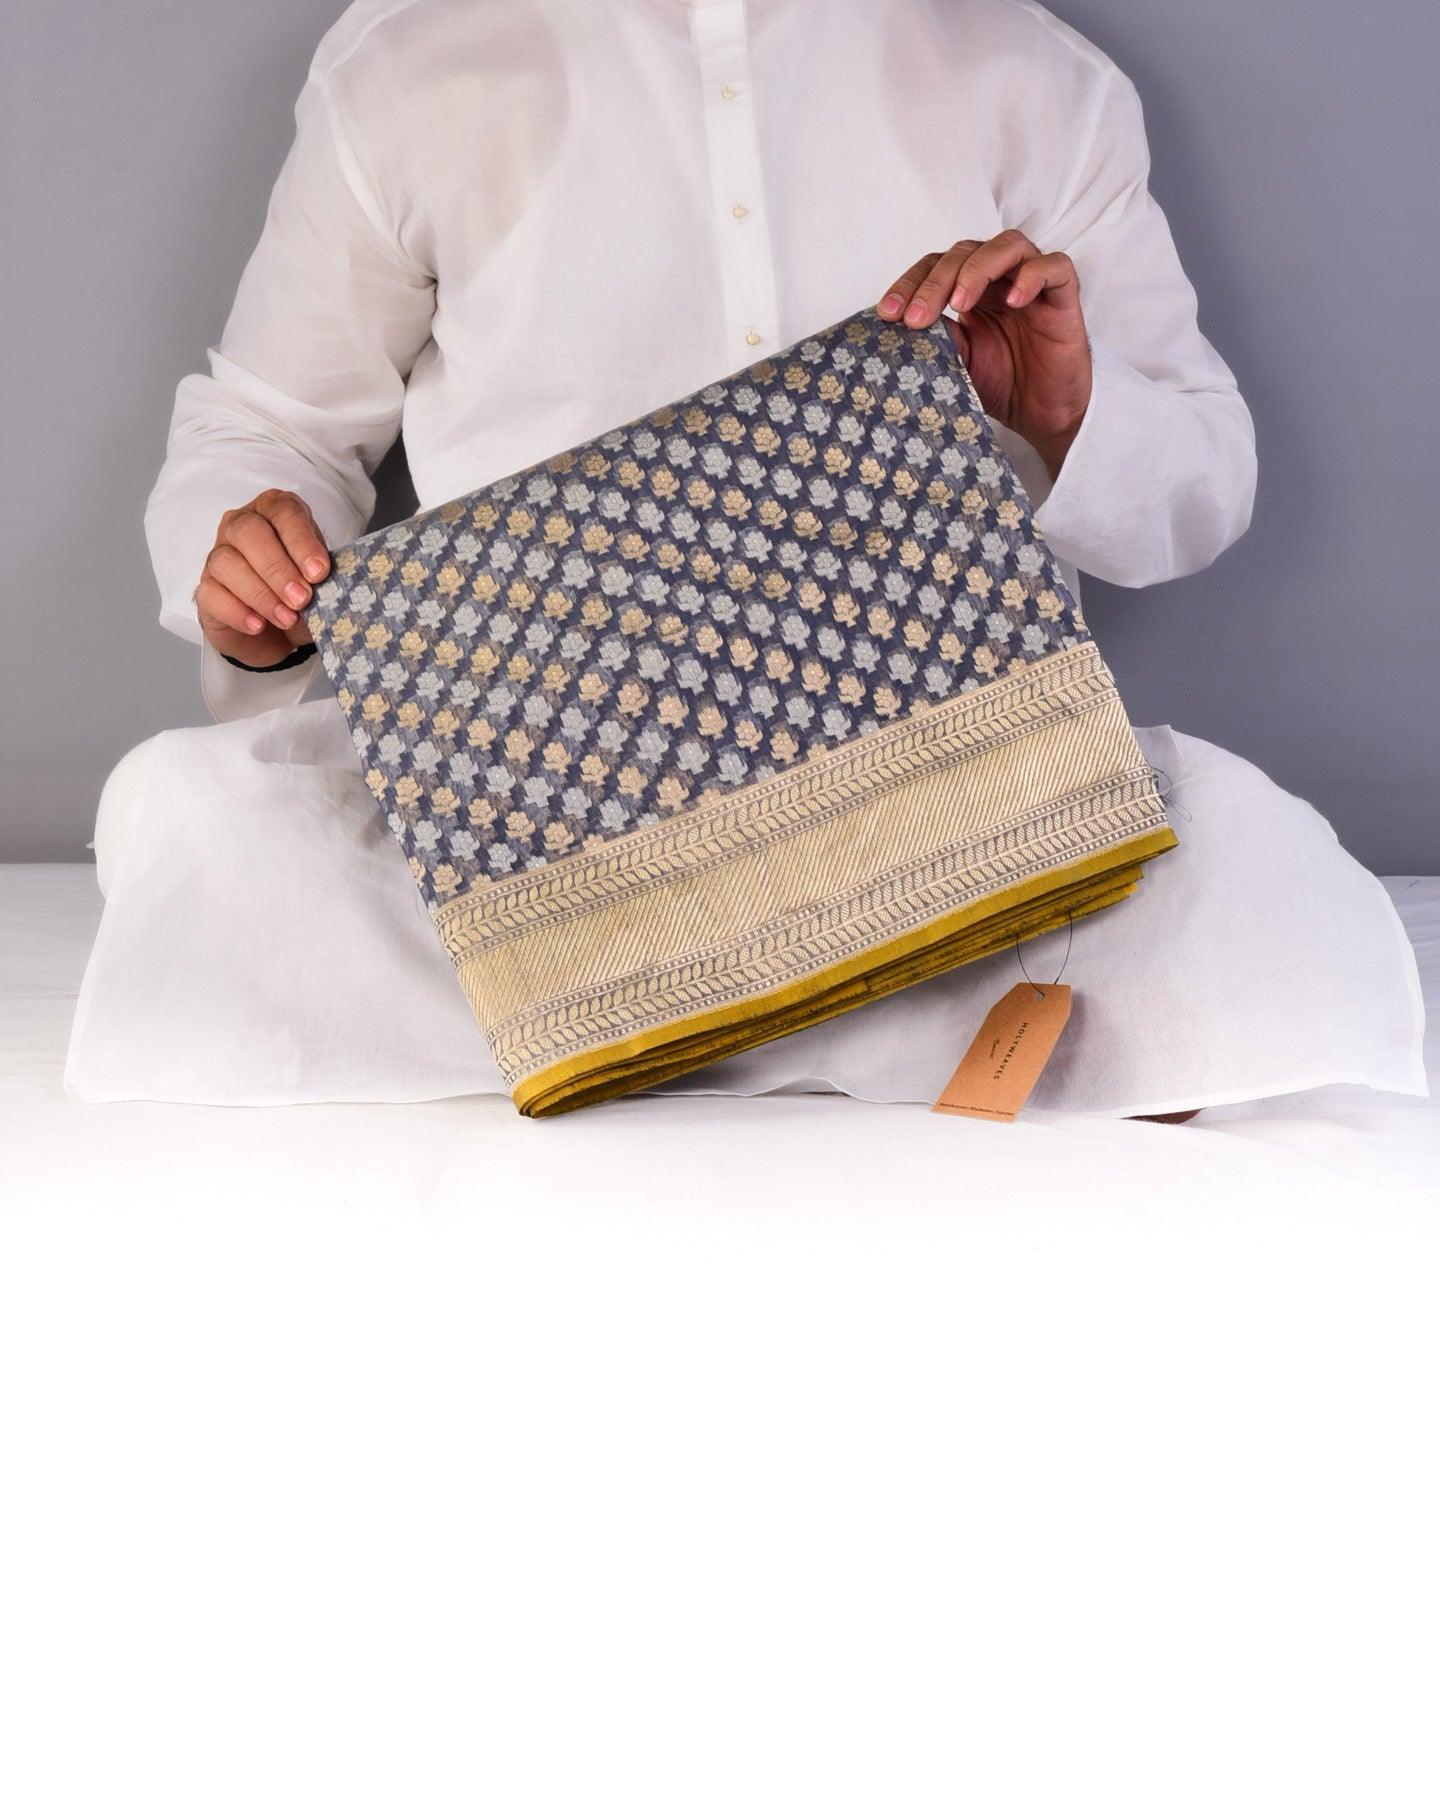 Gray Banarasi Alfi Buti Cutwork Brocade Handwoven Cotton Silk Saree - By HolyWeaves, Benares